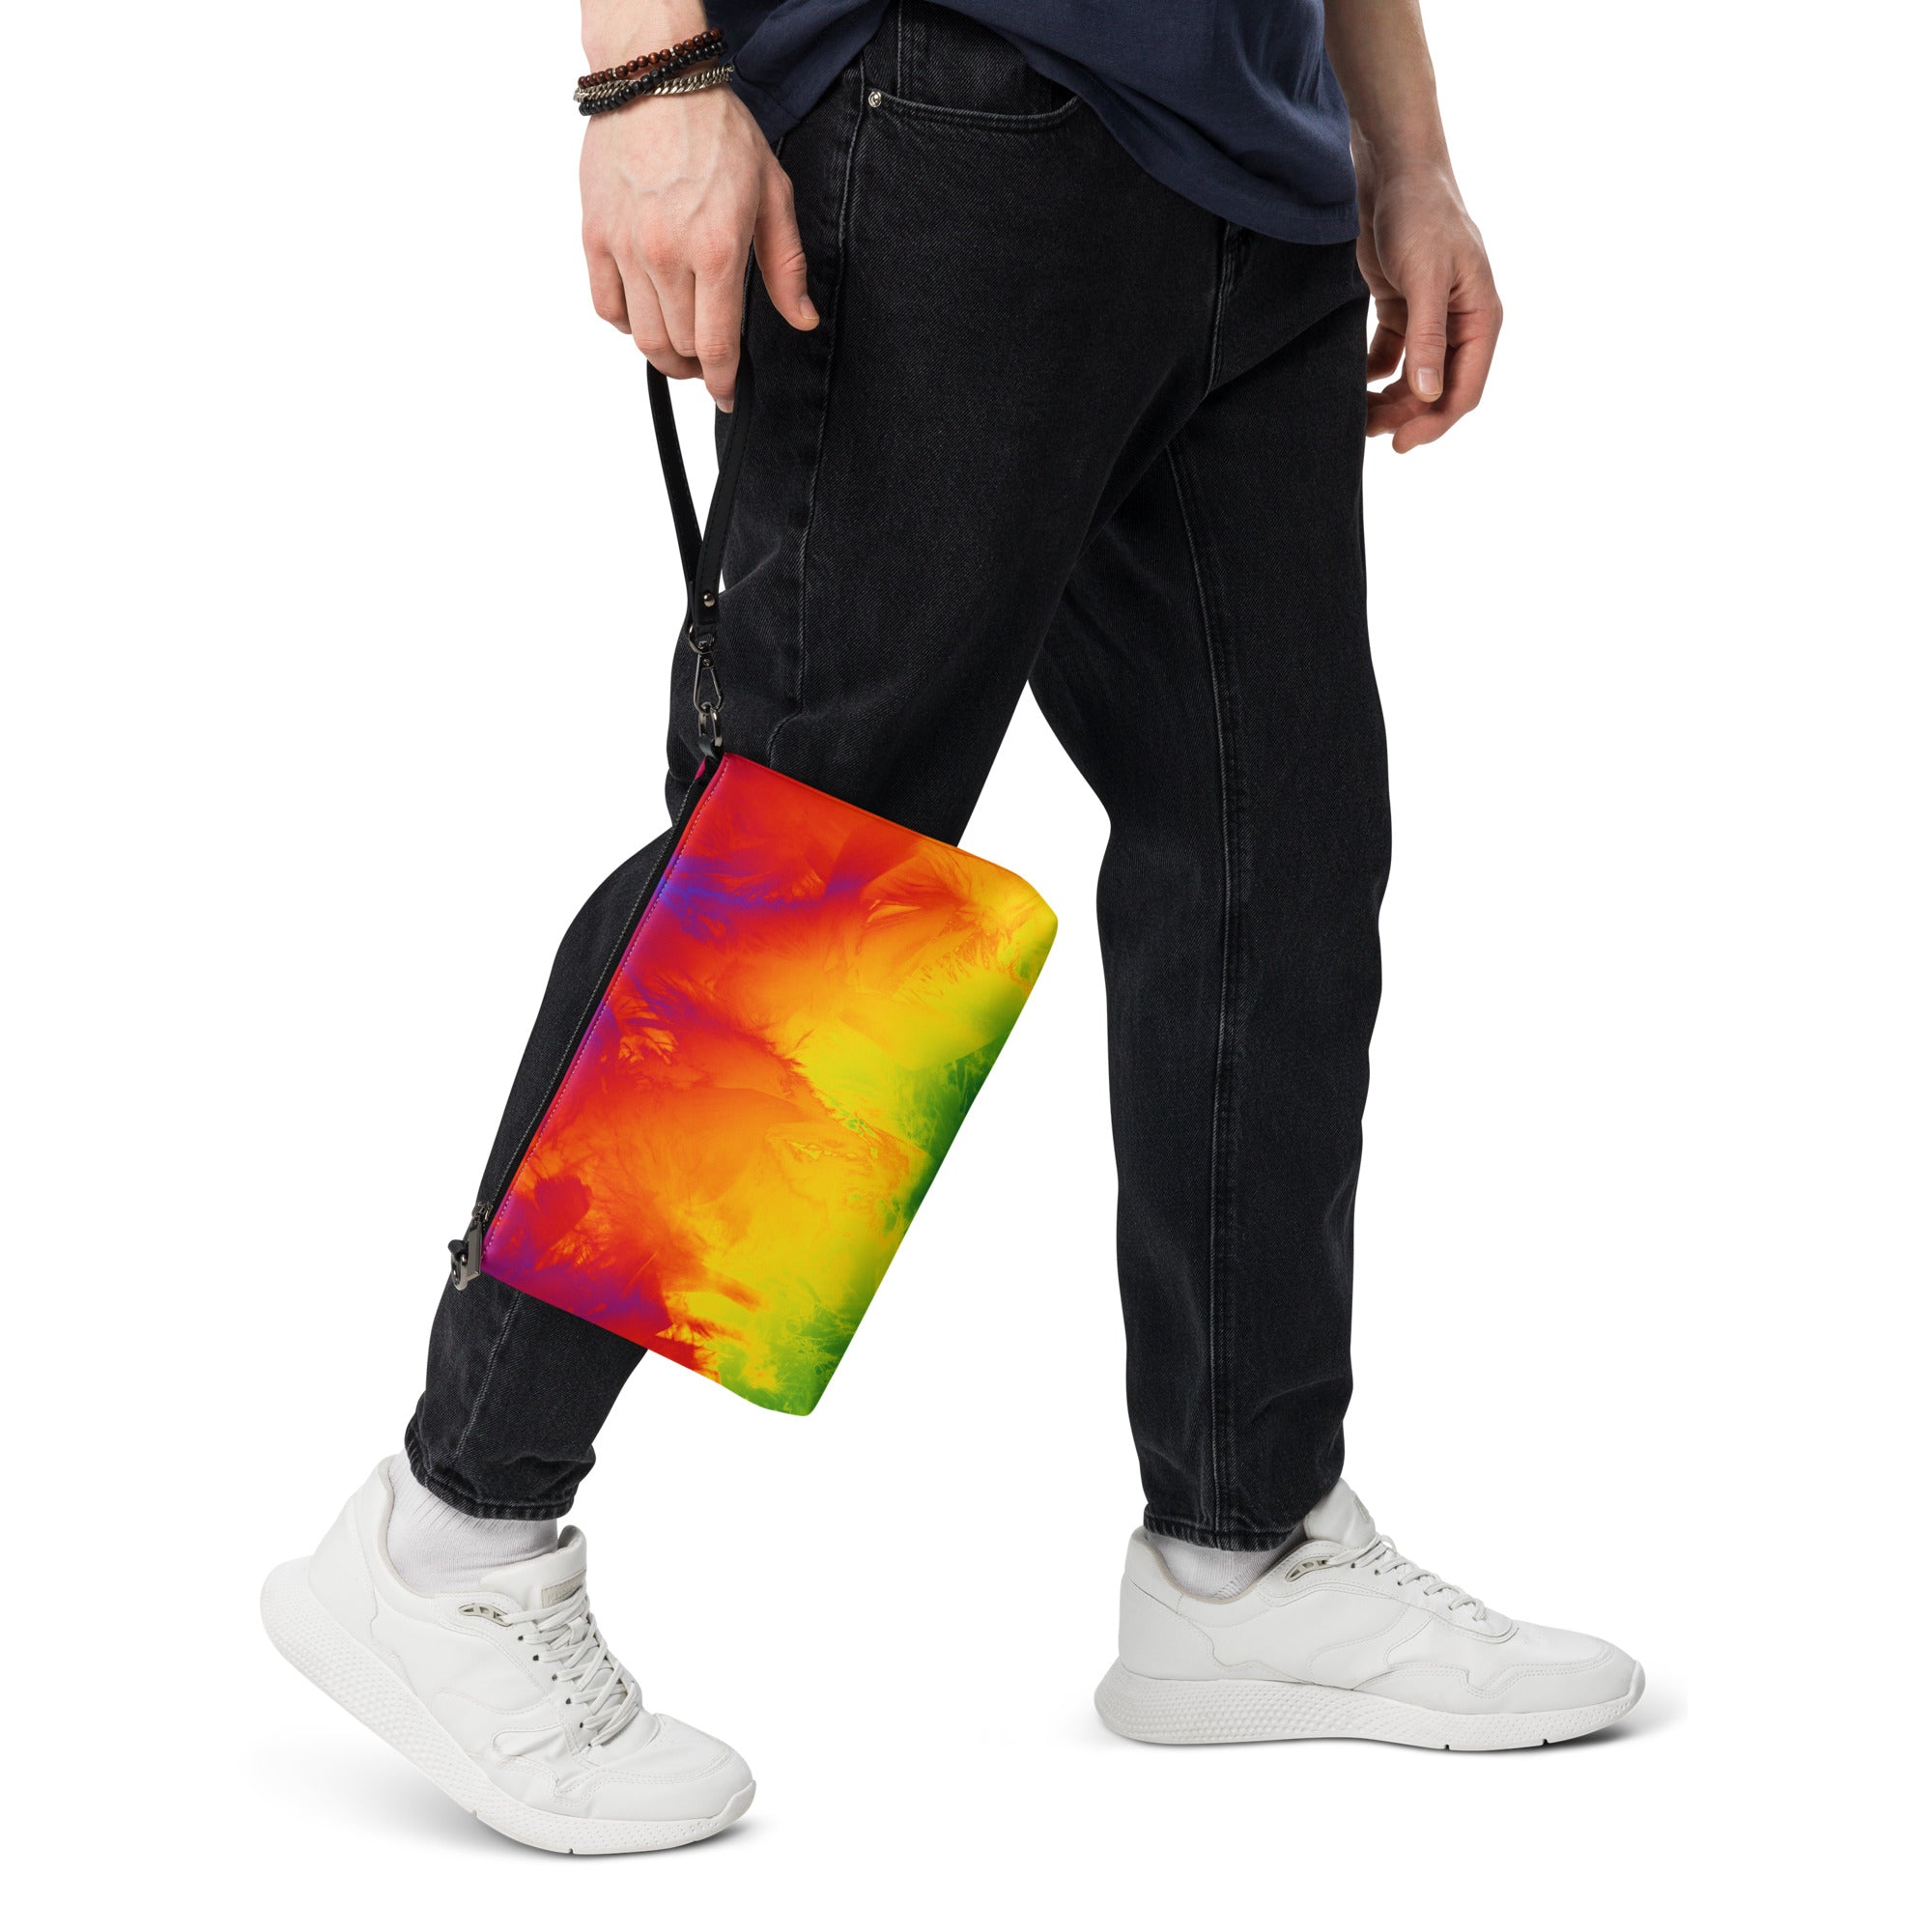 Rainbow Pride Premium Tote bag, Rainbow Reusable Bag, Rainbow Shopping Bag, Pride Gift